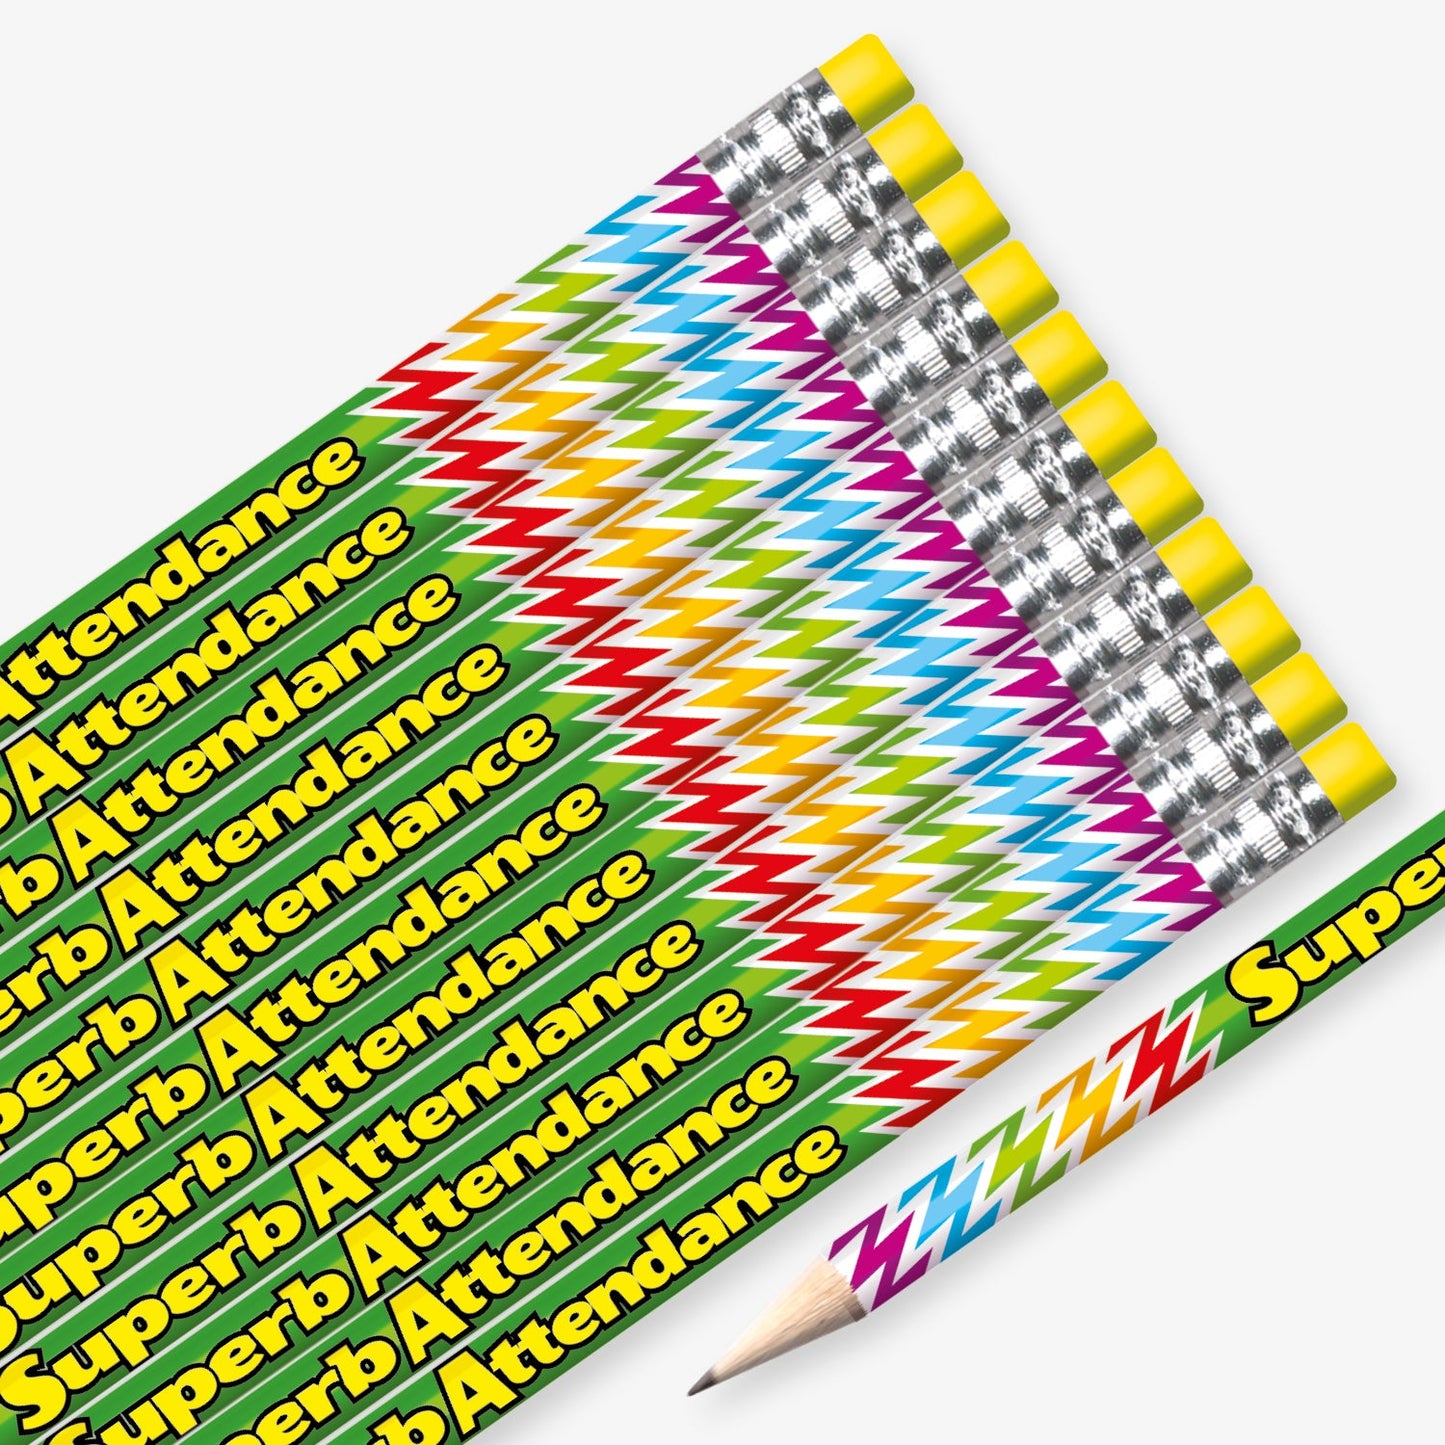 12 Superb Attendance Pencils